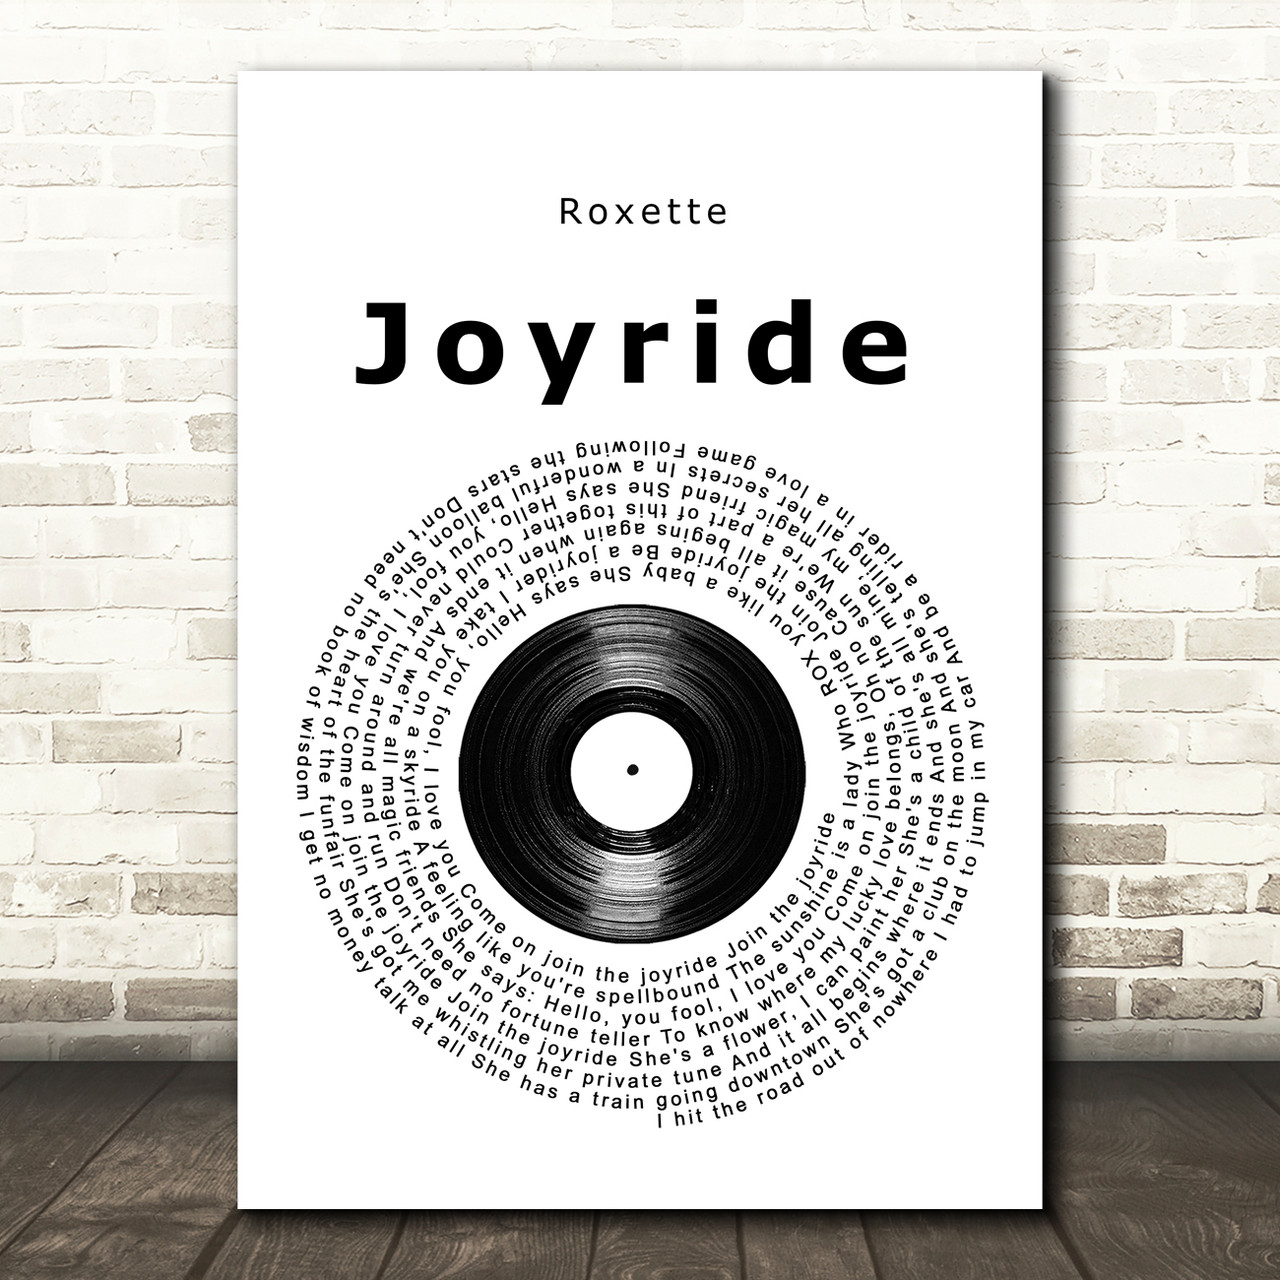 roxette joyride cover art